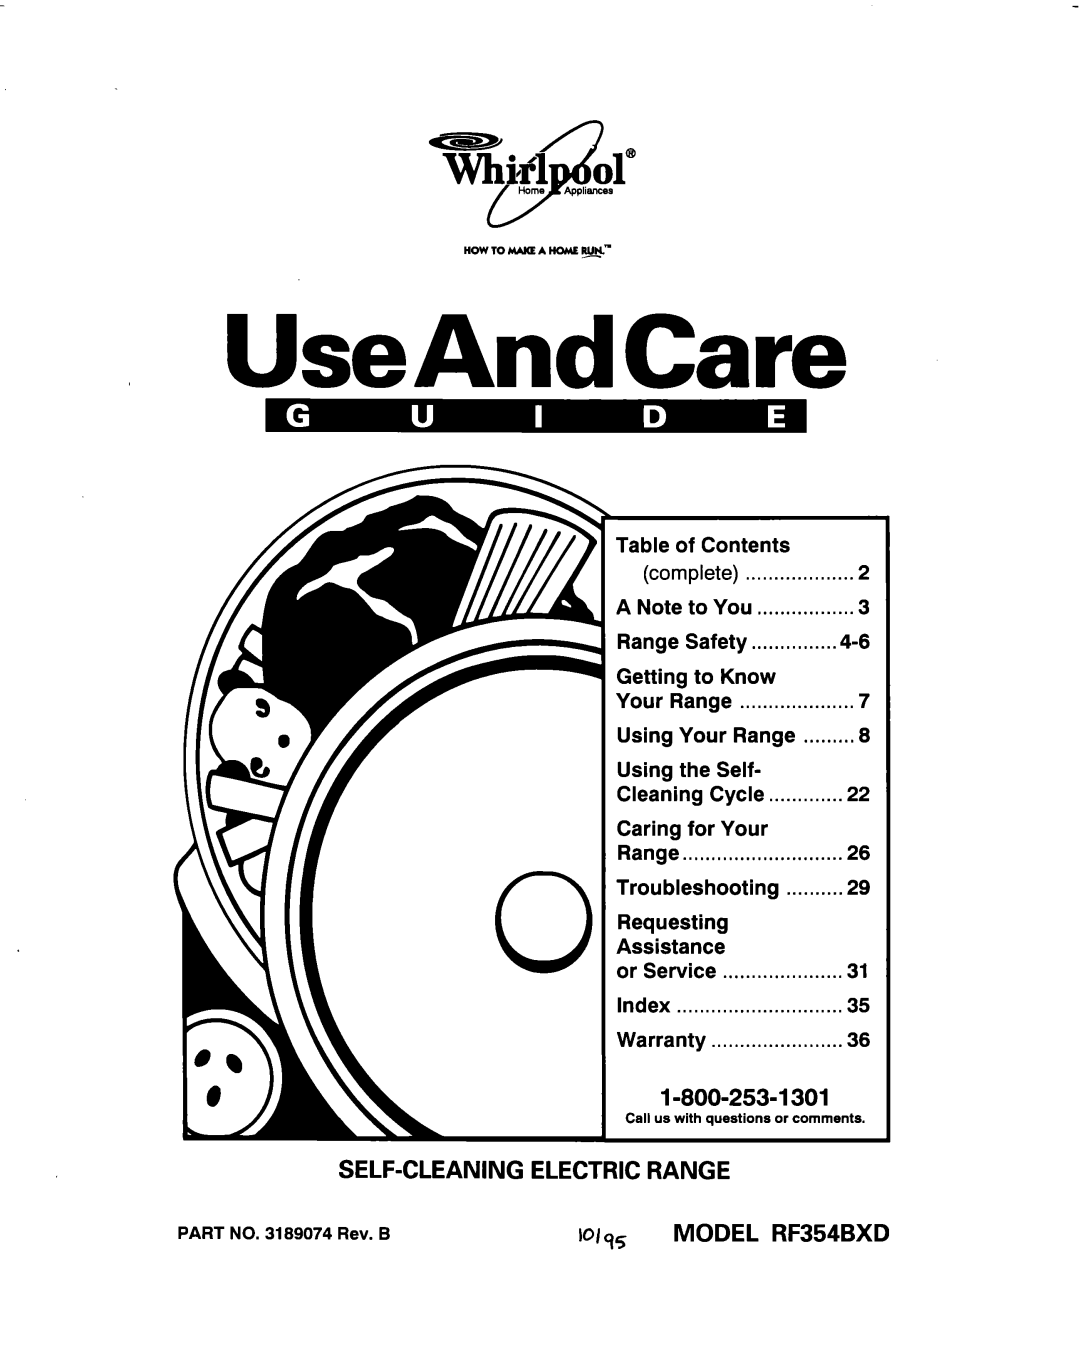 Whirlpool warranty UseAndCare, Tikll 01”, Self-Cleaningelectric Range, MODEL RF354BXD 